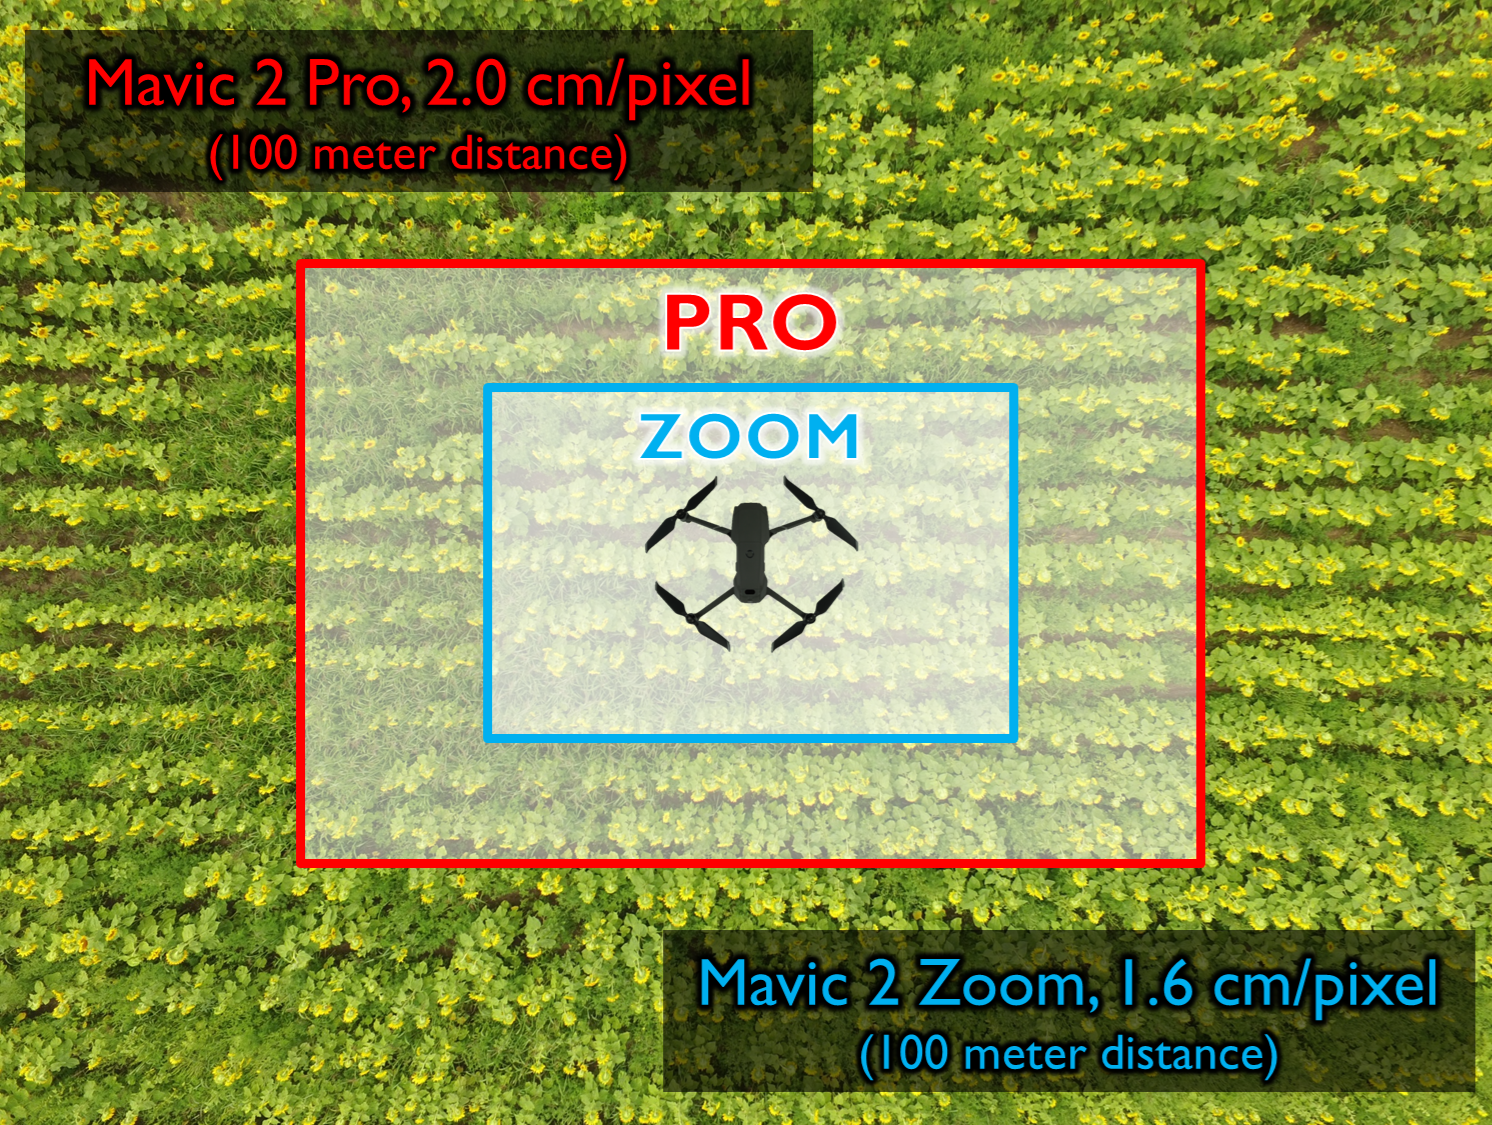 mavic 2 zoom 48 megapixel